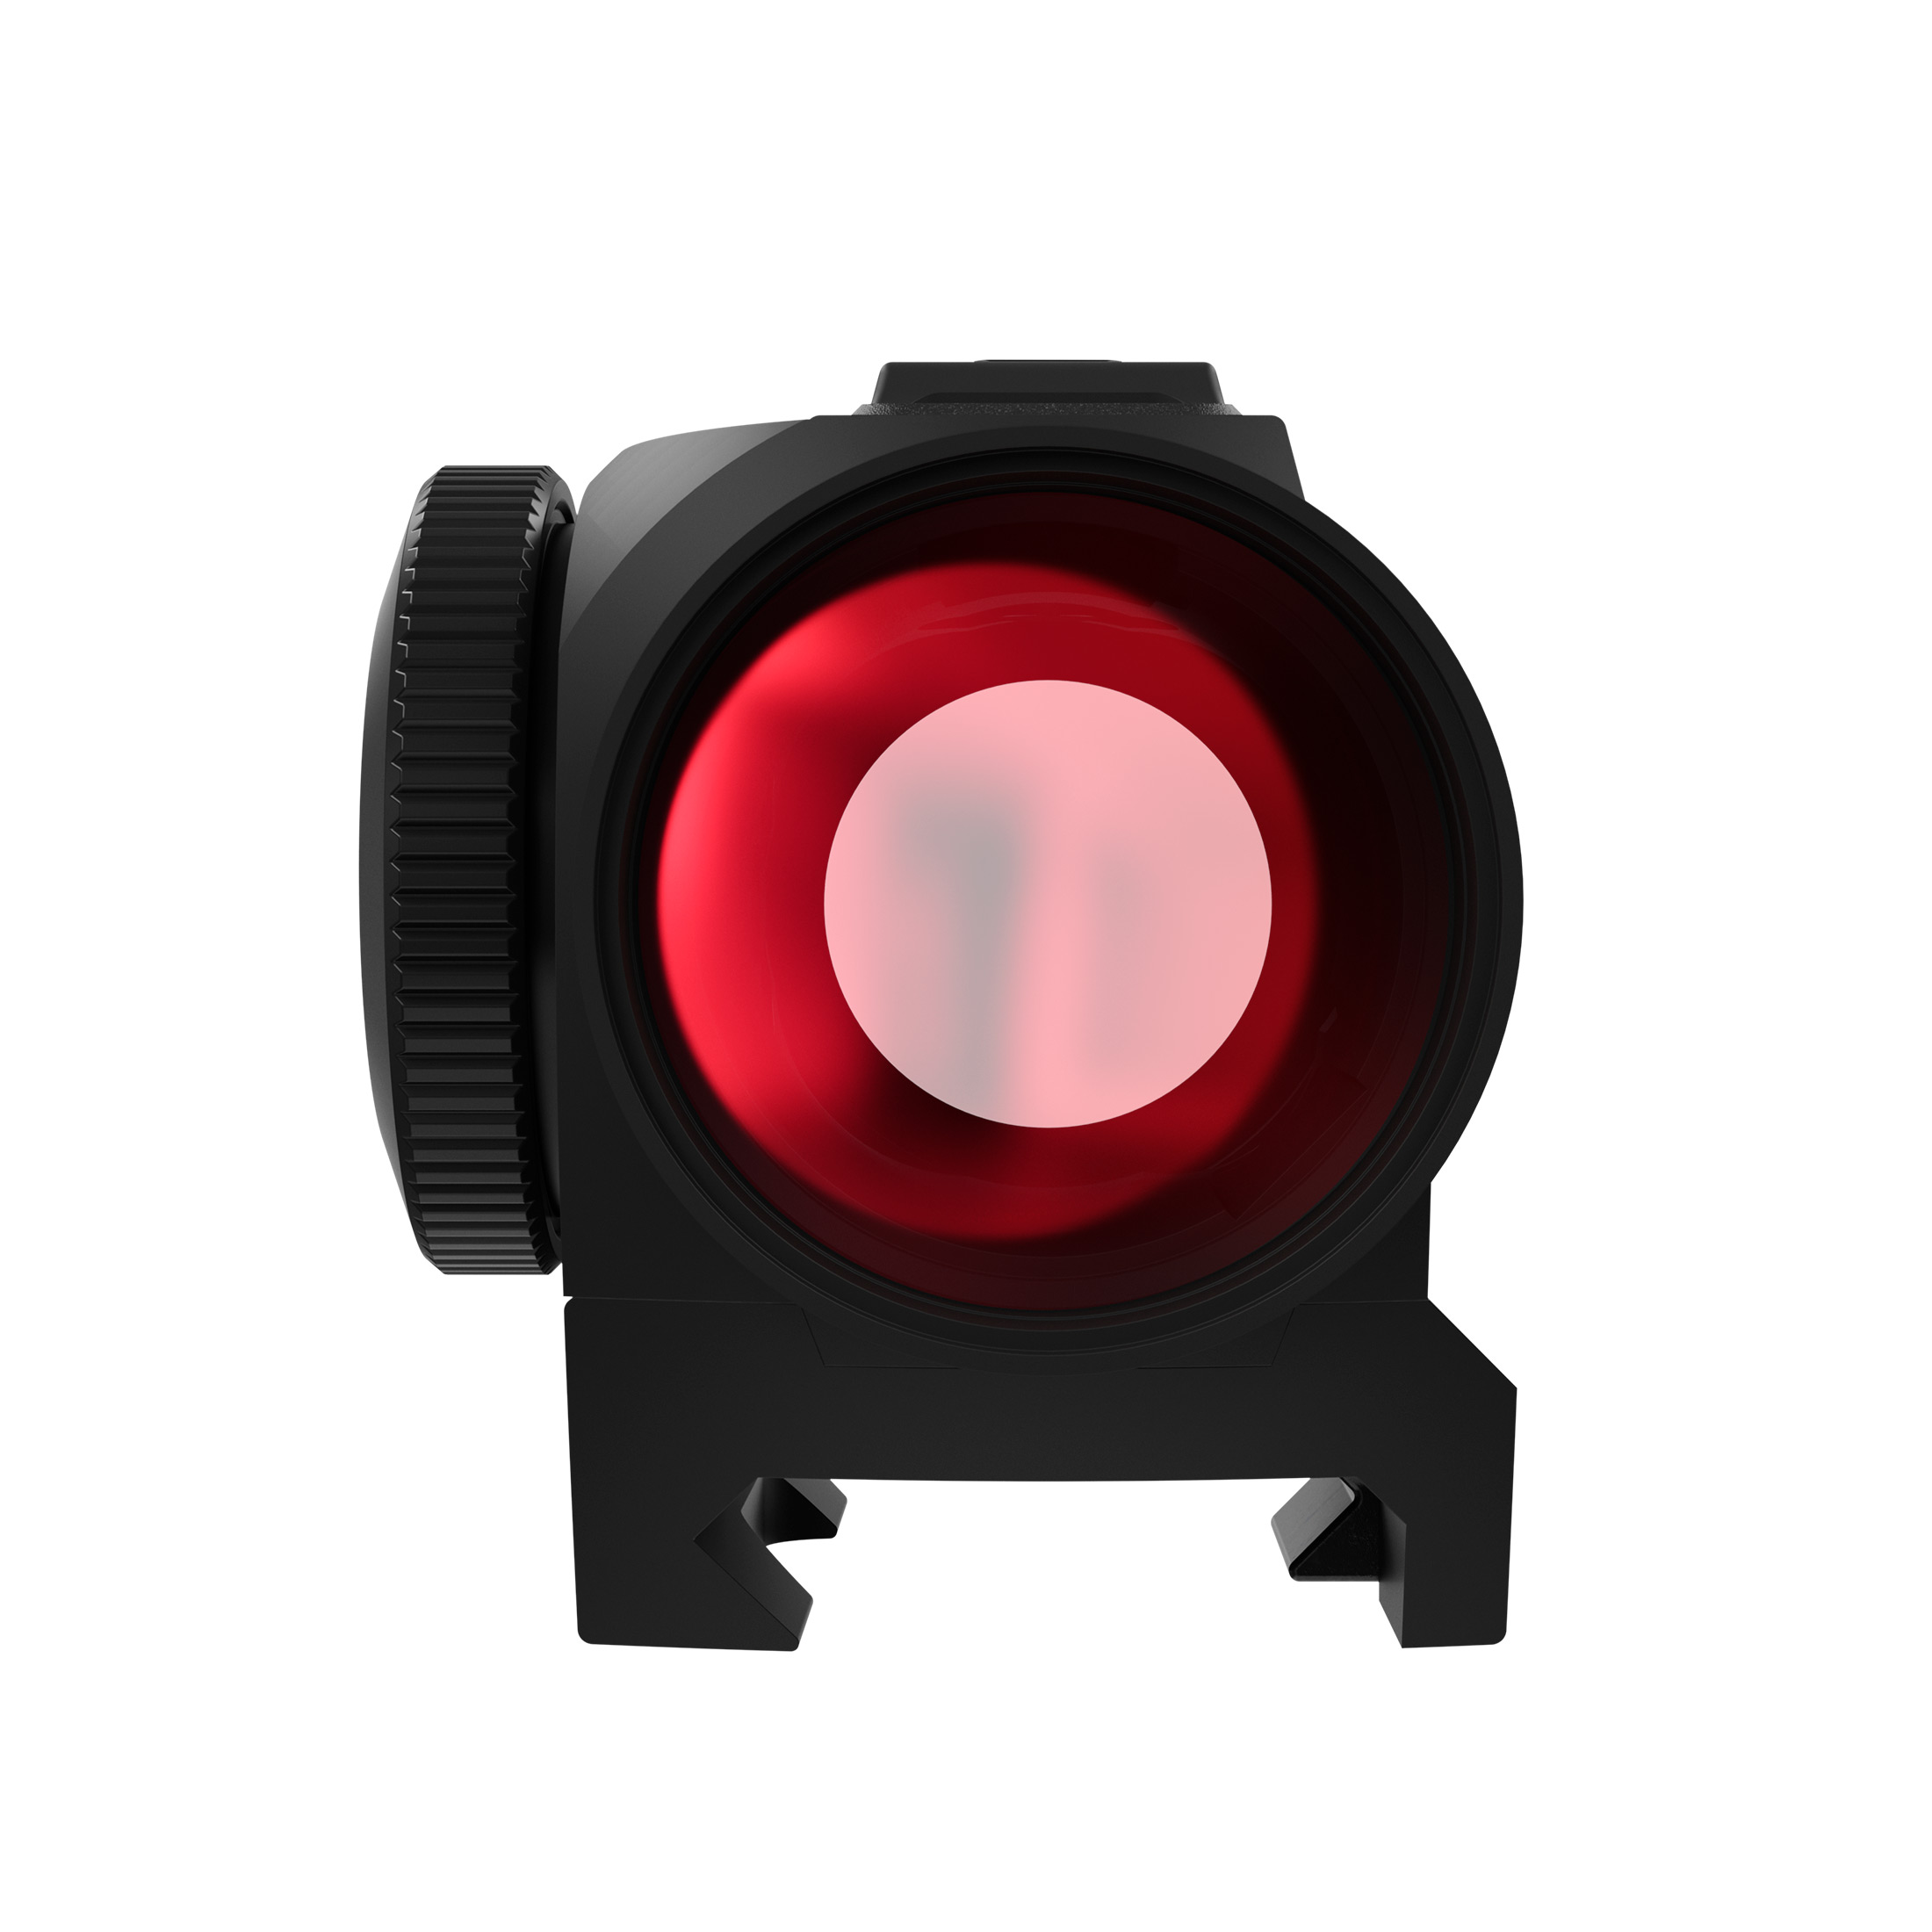 Holosun Dot Sight CLASSIC HS503G-U-BLACK-RENEWED